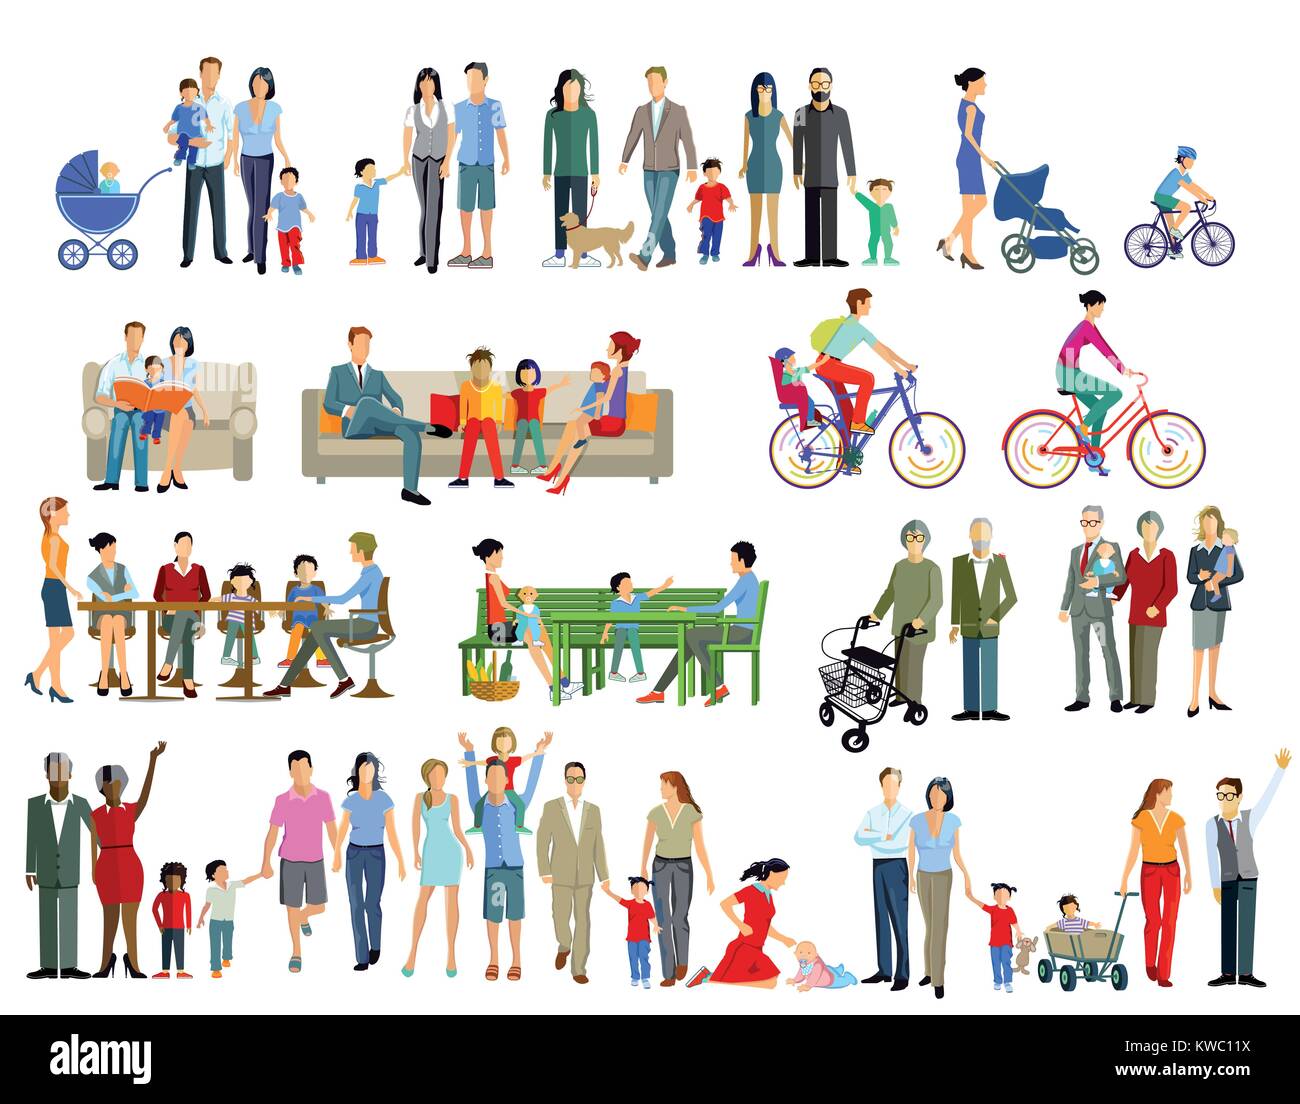 Family life generation, illustration Stock Vector